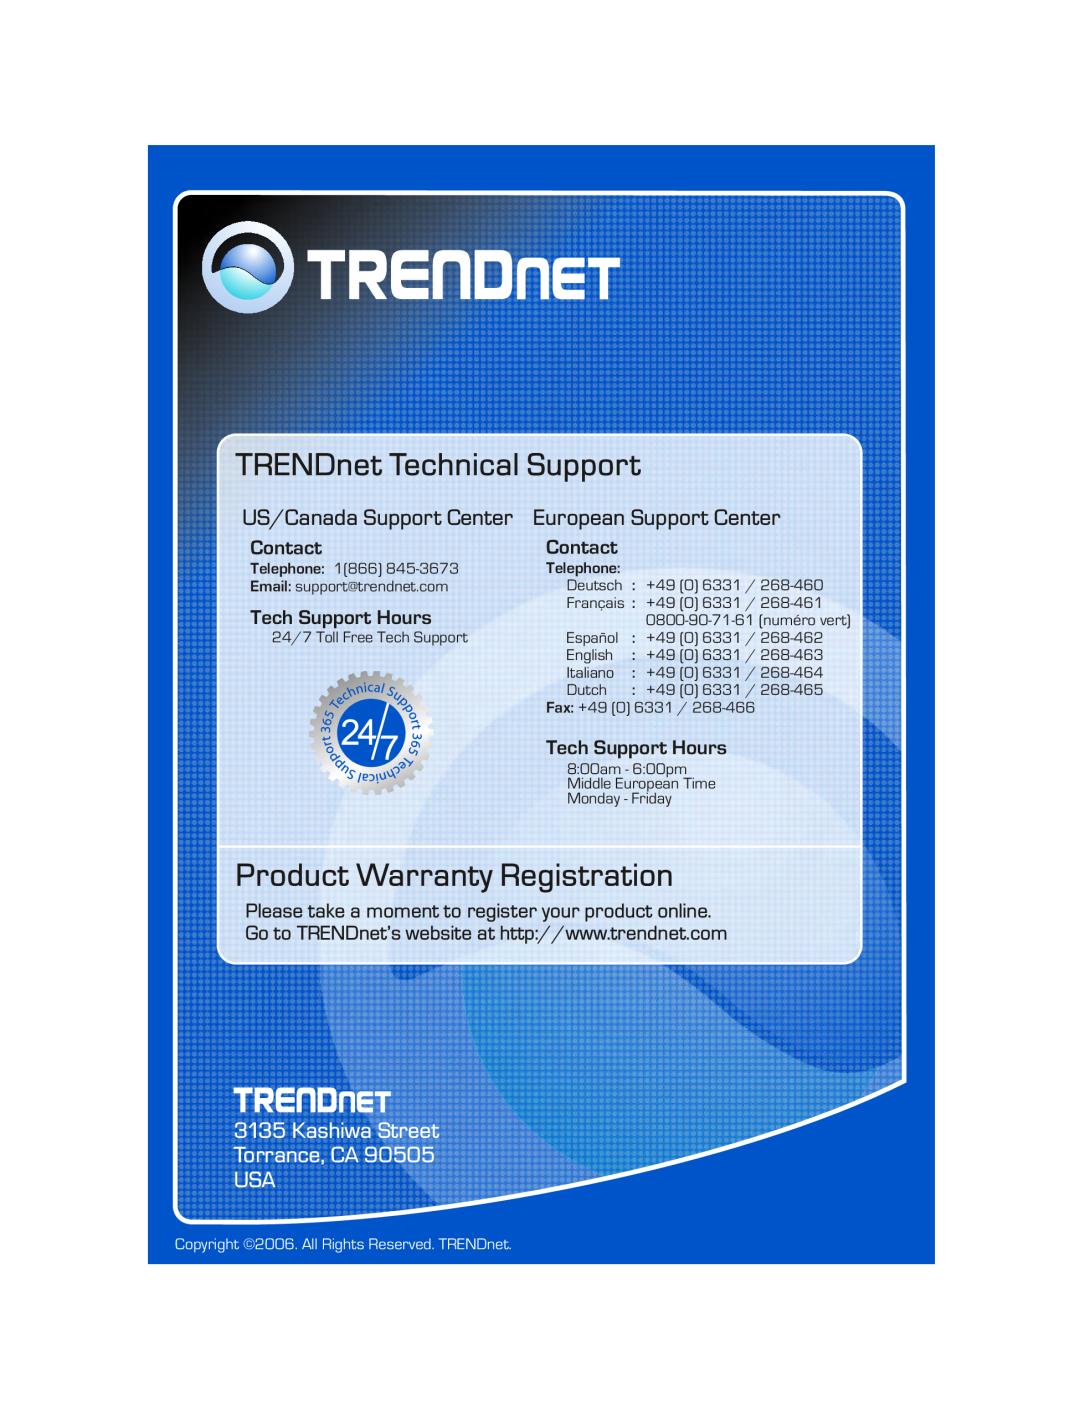 TRENDnet TFU-H33PI TRENDnet Technical Support, Product Warranty Registration, Kashiwa Street Torrance, CA USA, Contact 